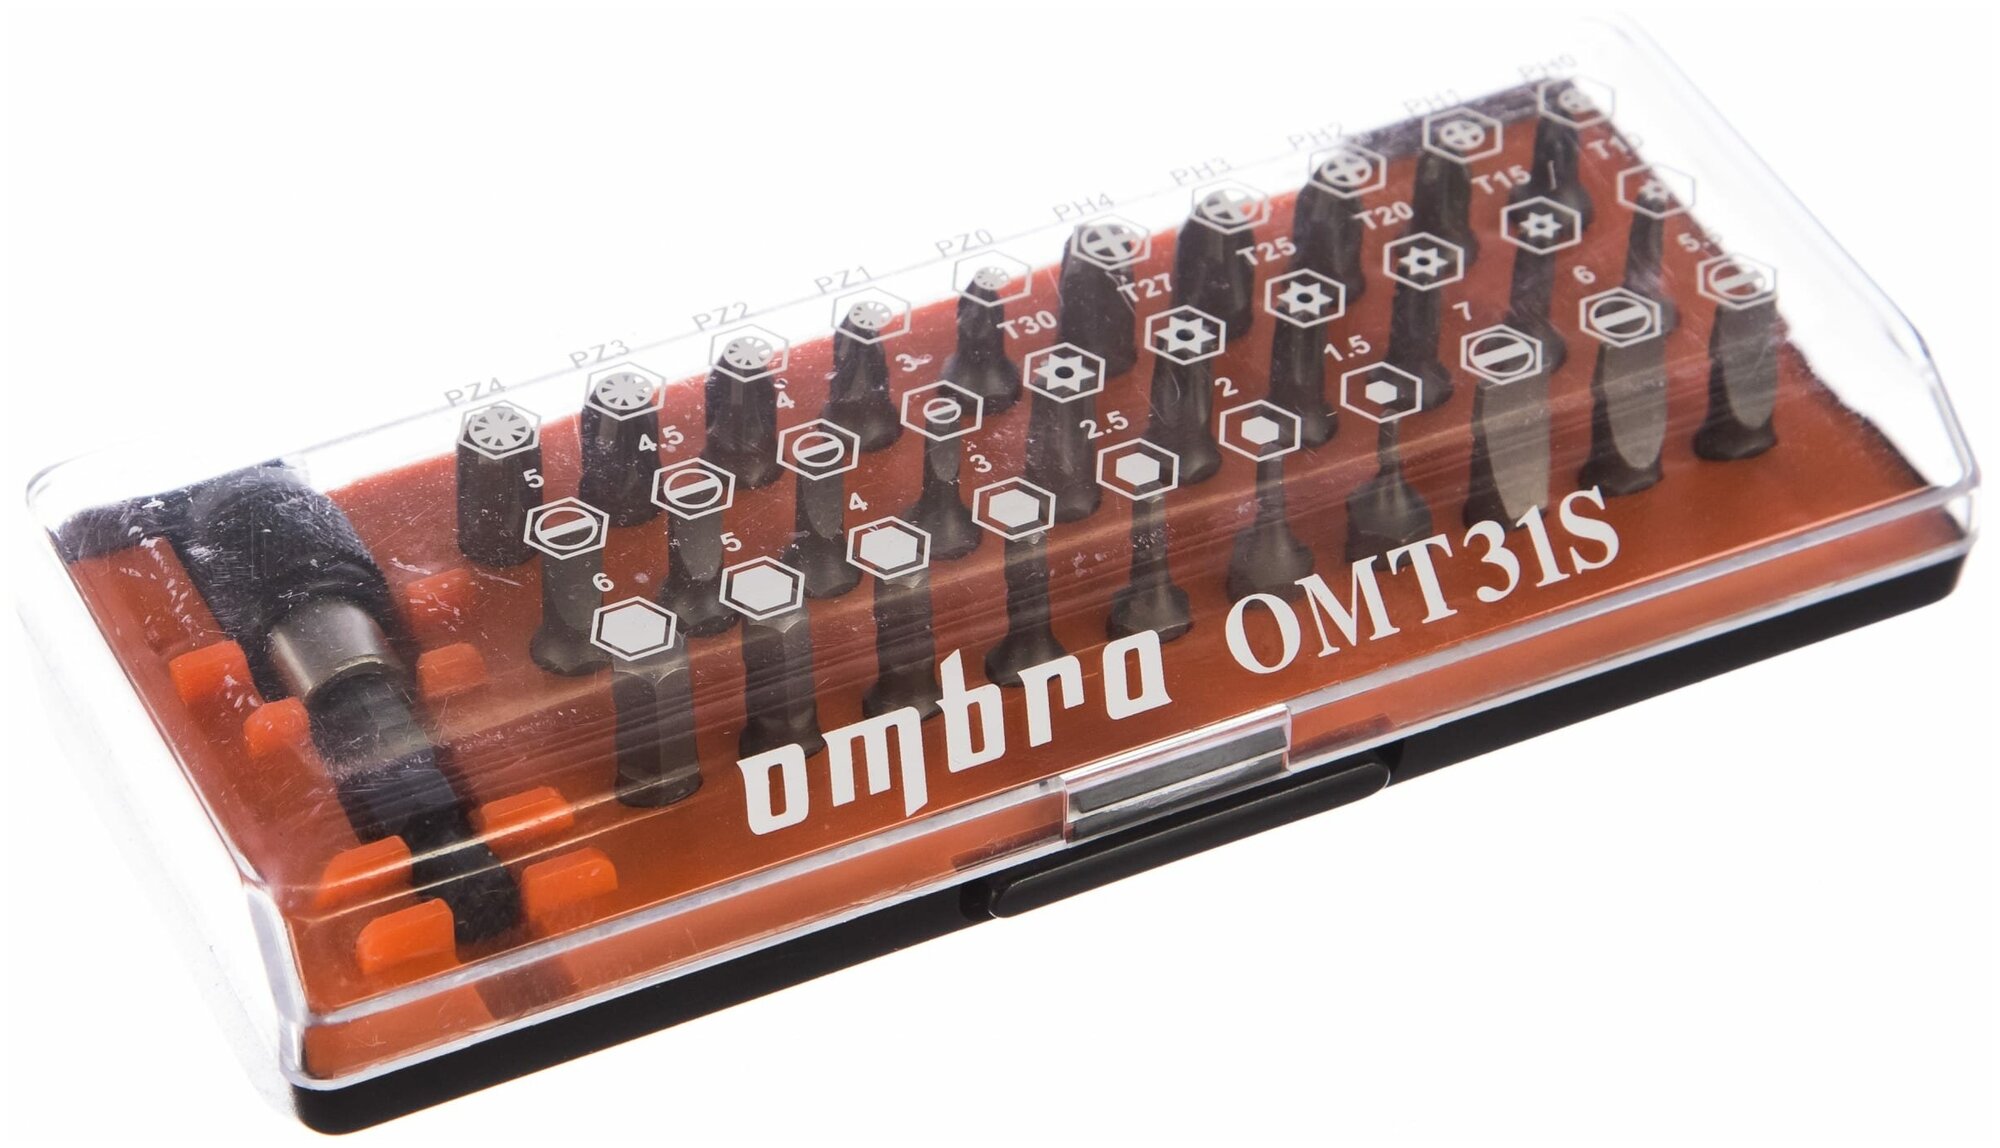 Набор бит и насадок Ombra OMT31S, 31 предм., оранжевый